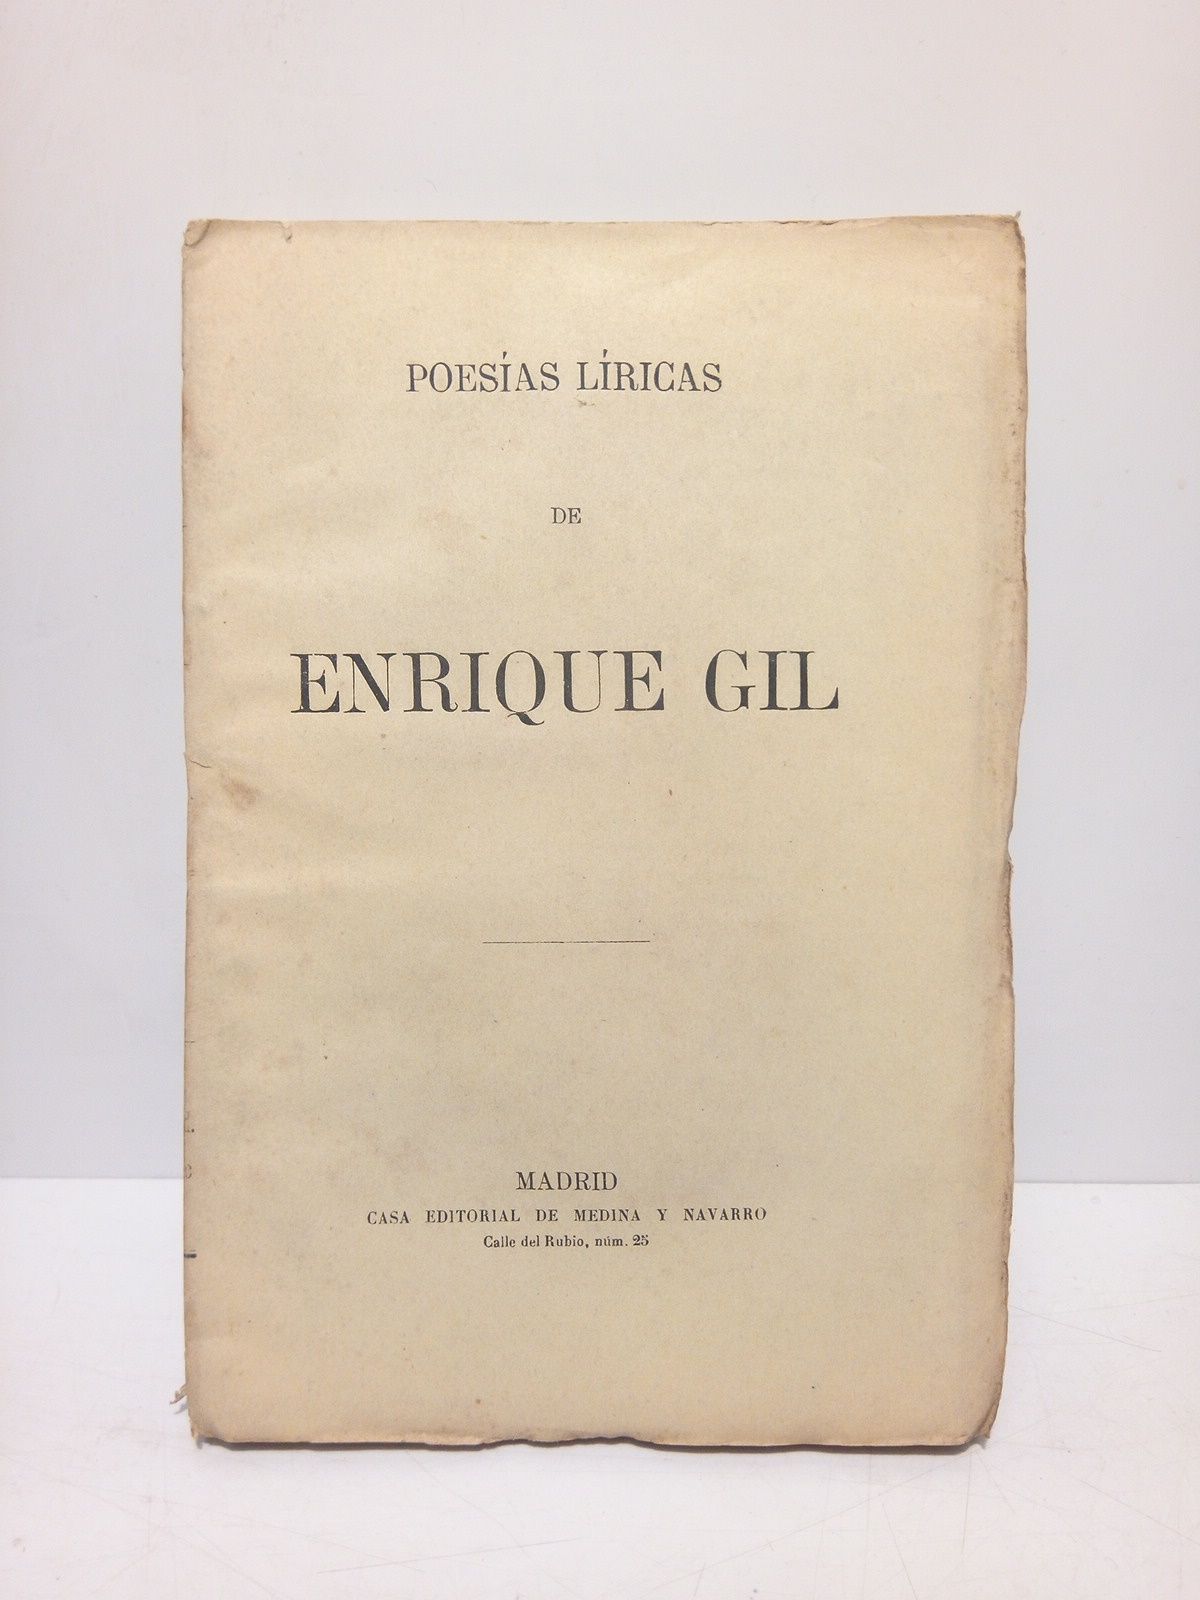 GIL [Y CARRASCO], Enrique - Obras de Enrique Gil ahora por primera vez reunidas en coleccin: 1, POESIAS LIRICAS /  Dos Palabras [de presentacin] por G. Laverde; sigue  